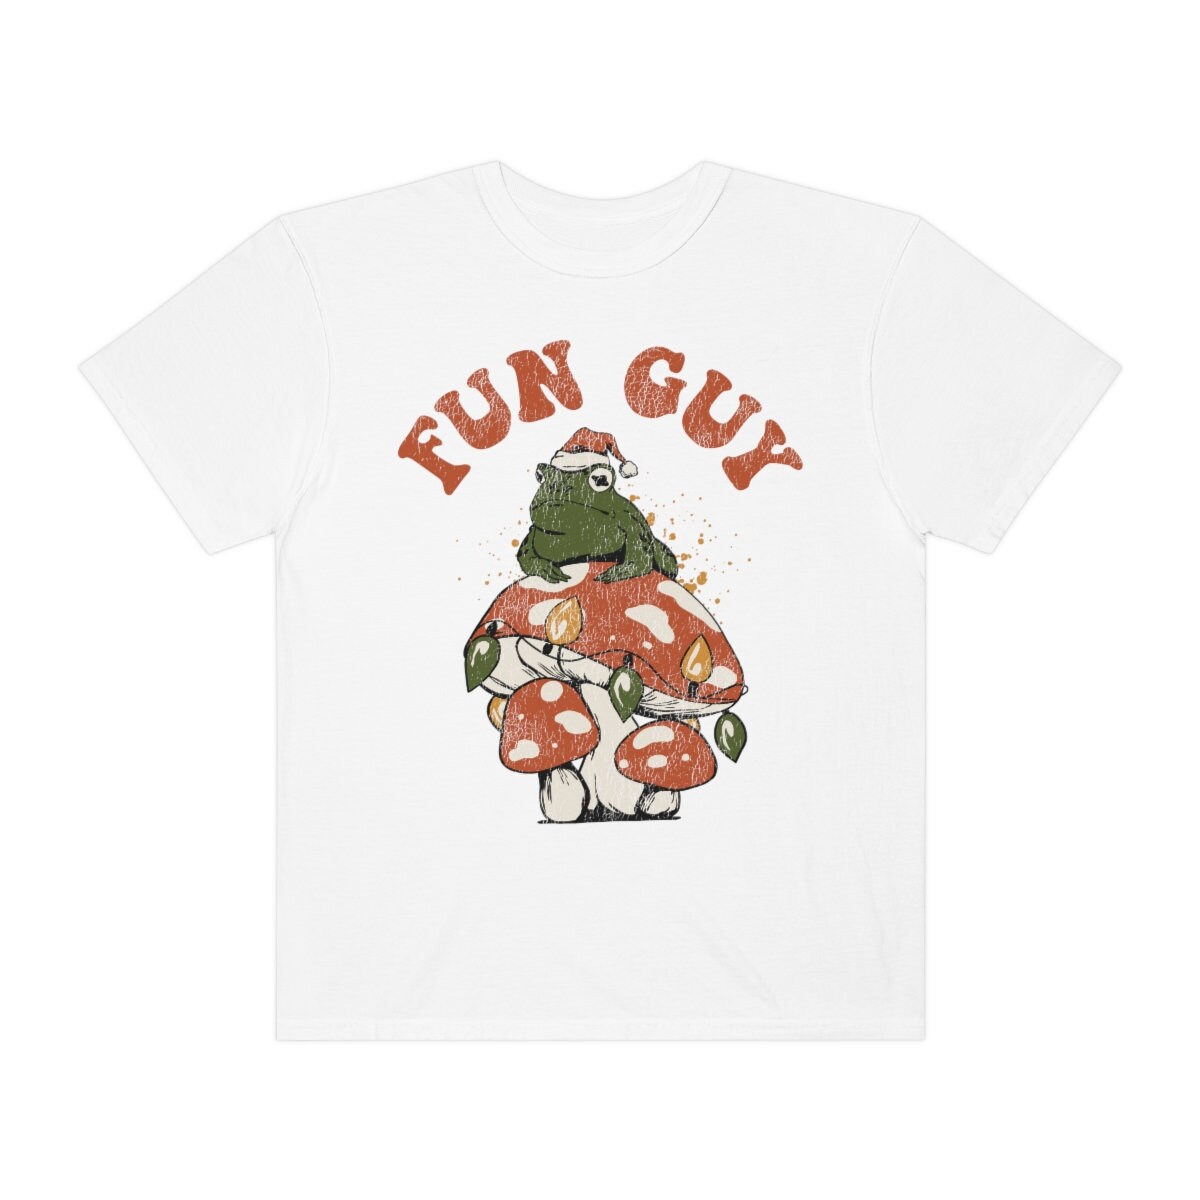 Discover Christmas Fun guy funny T shirt Mushroom Humor Tee